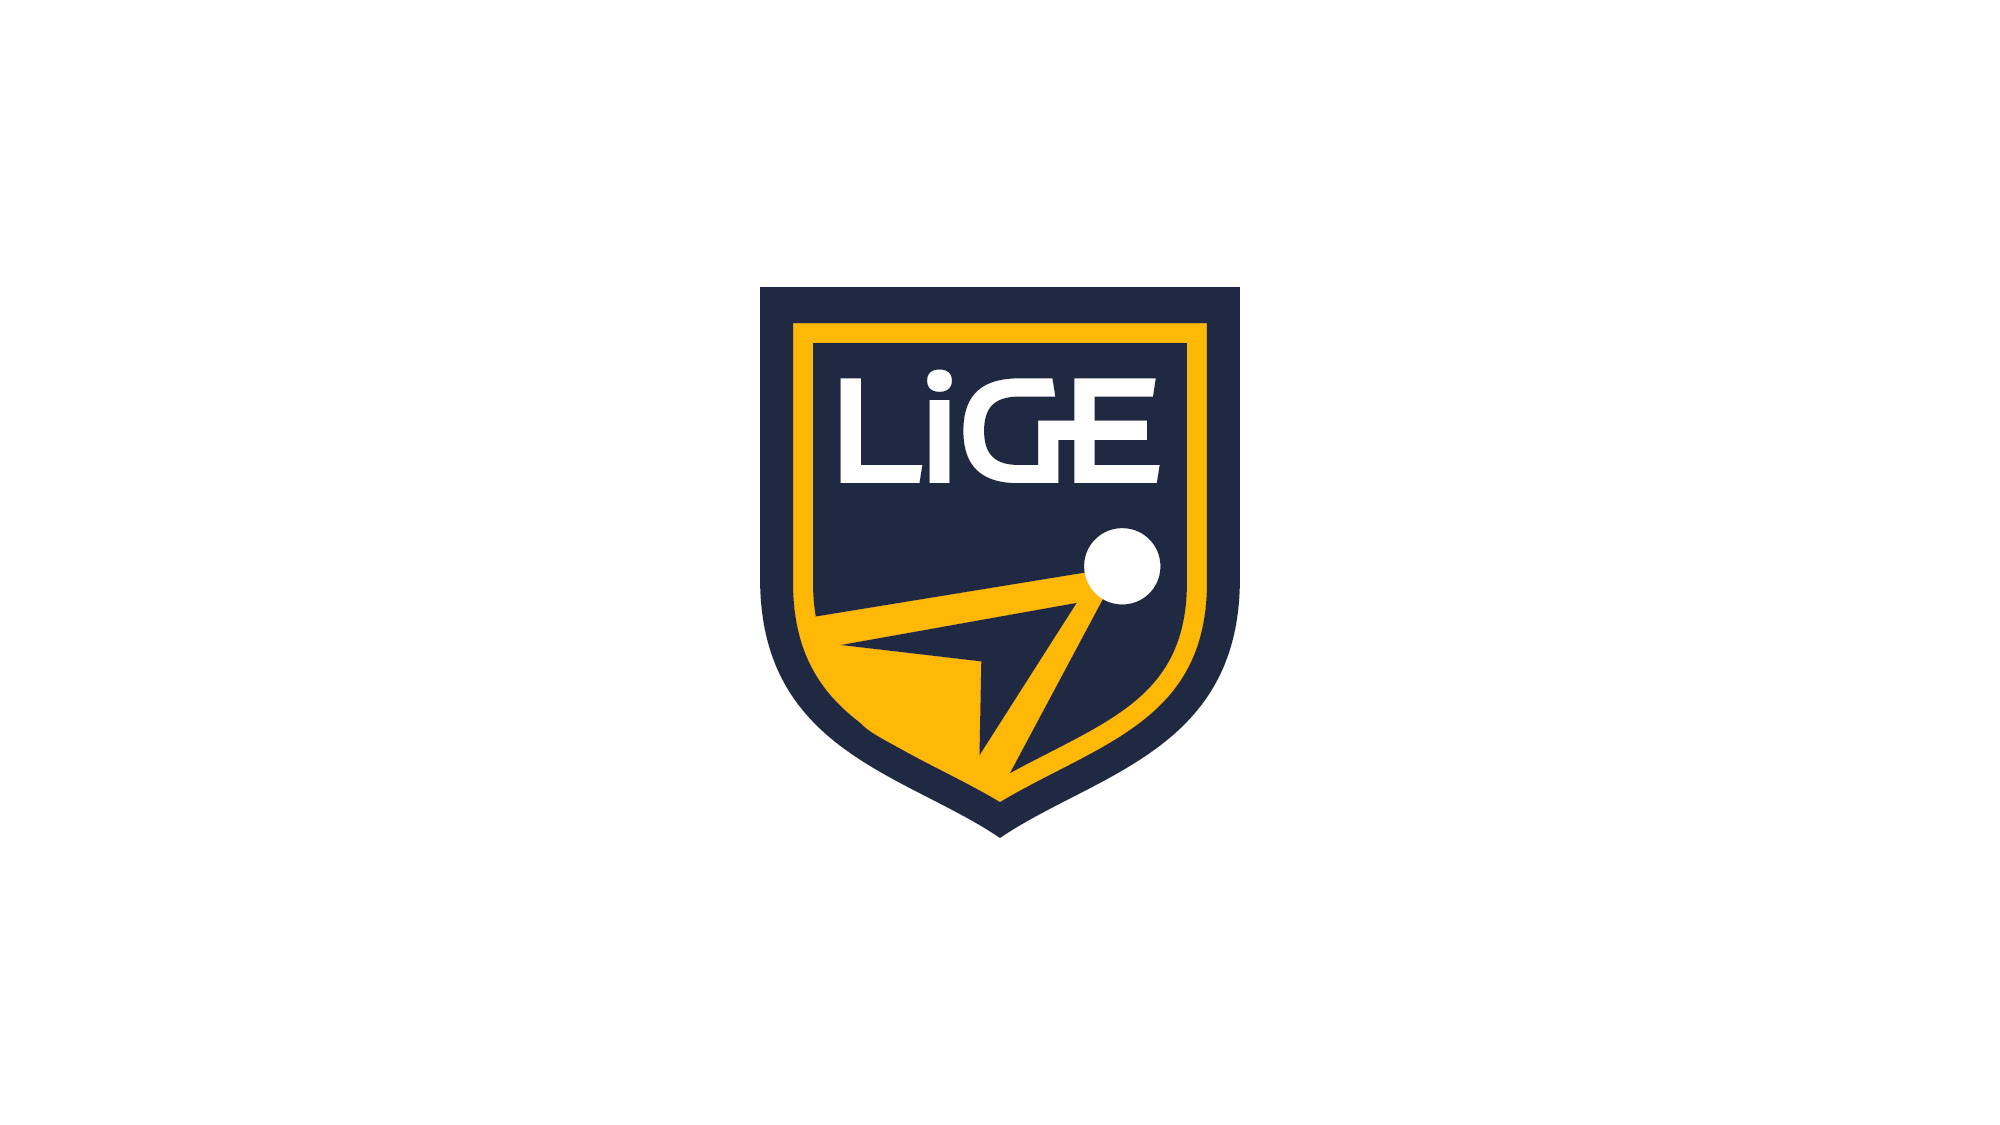 Lige-FGV-SP-Nacione-Branding4